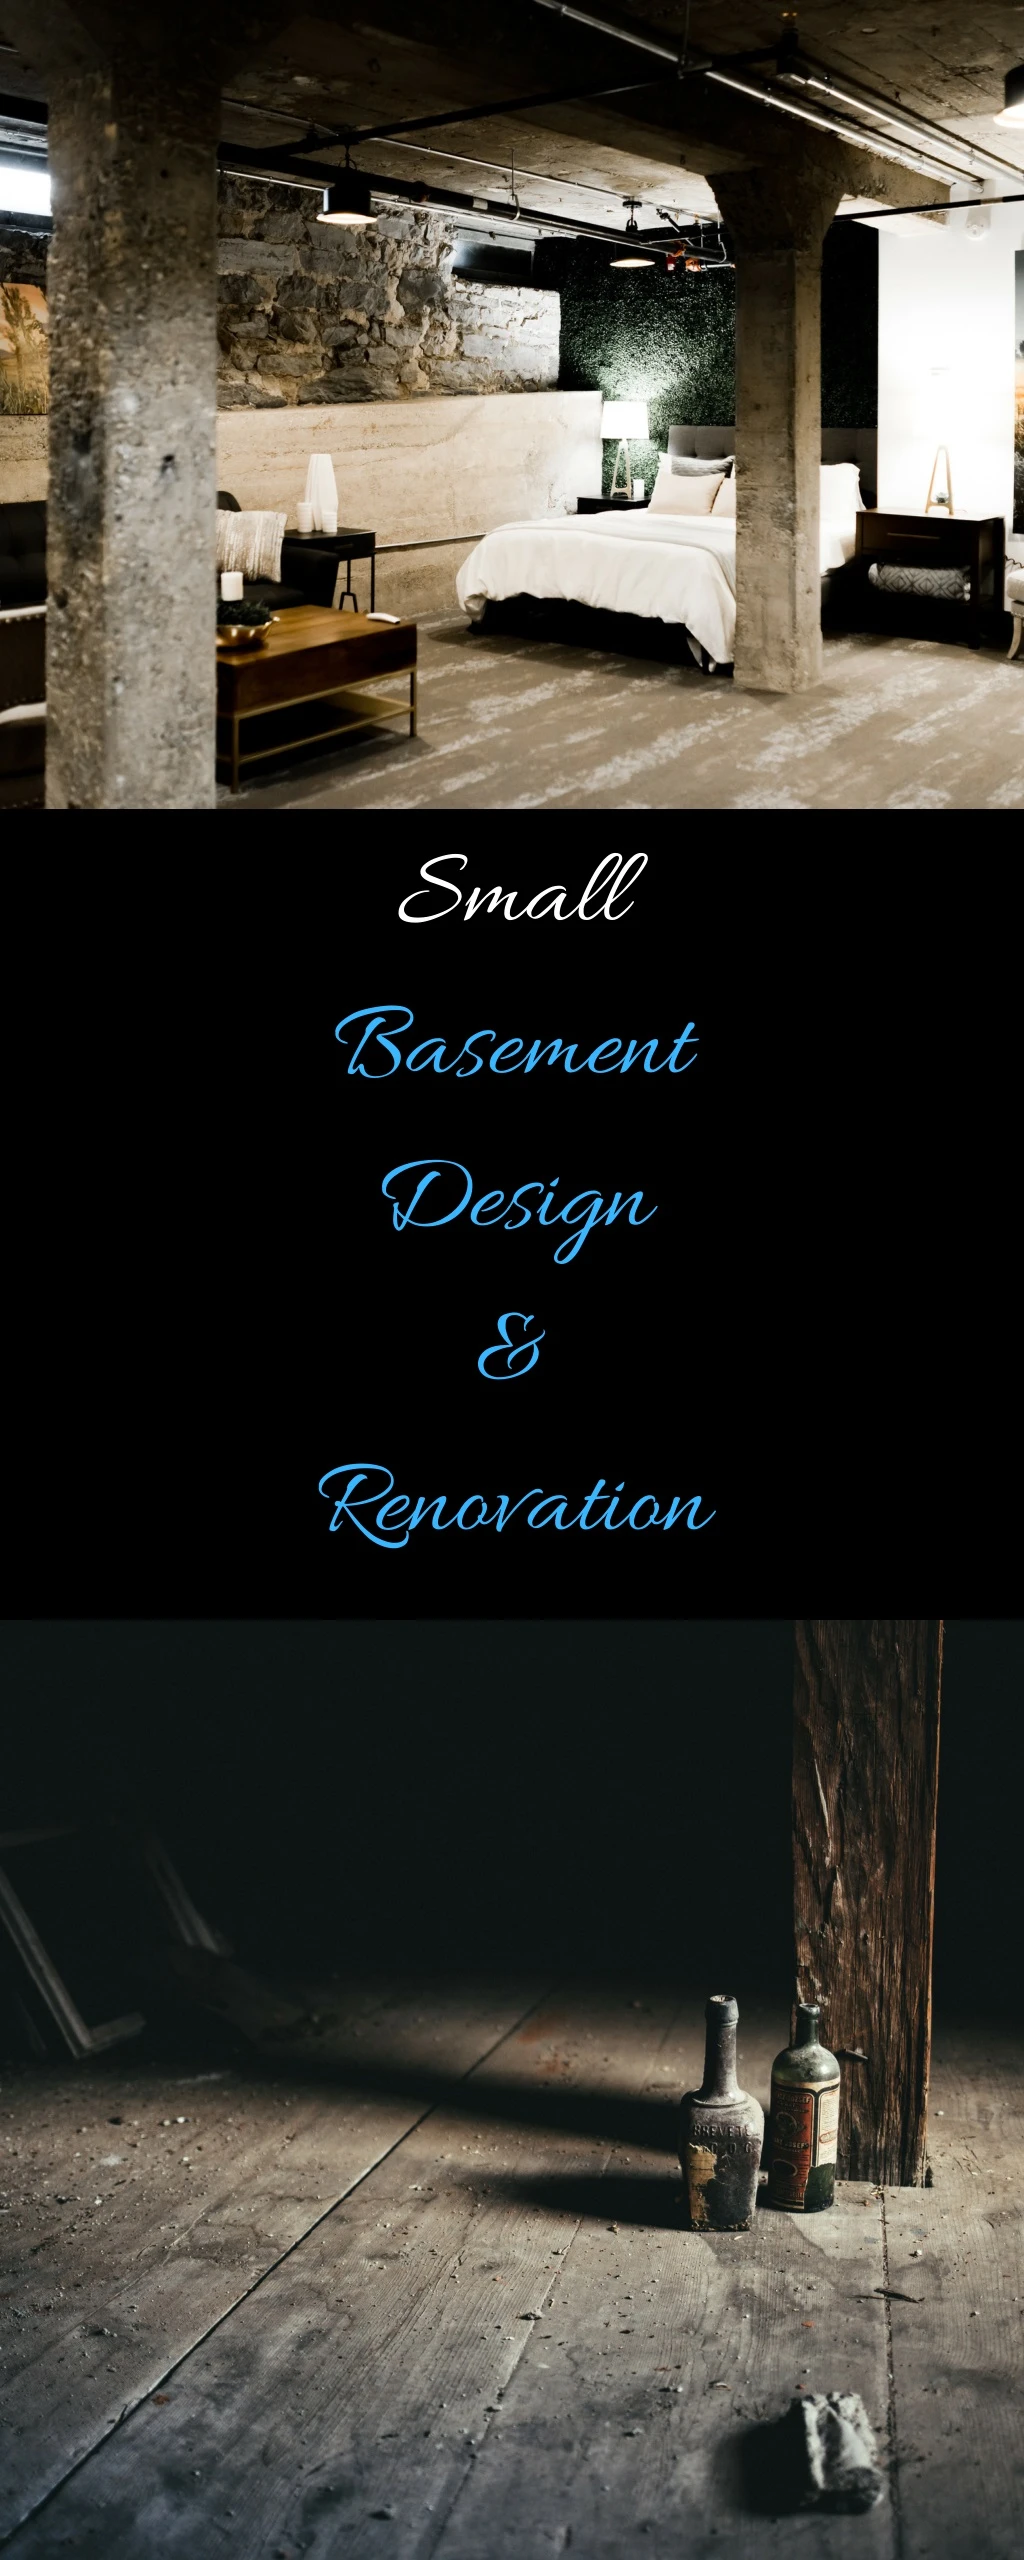 small basement design renovation